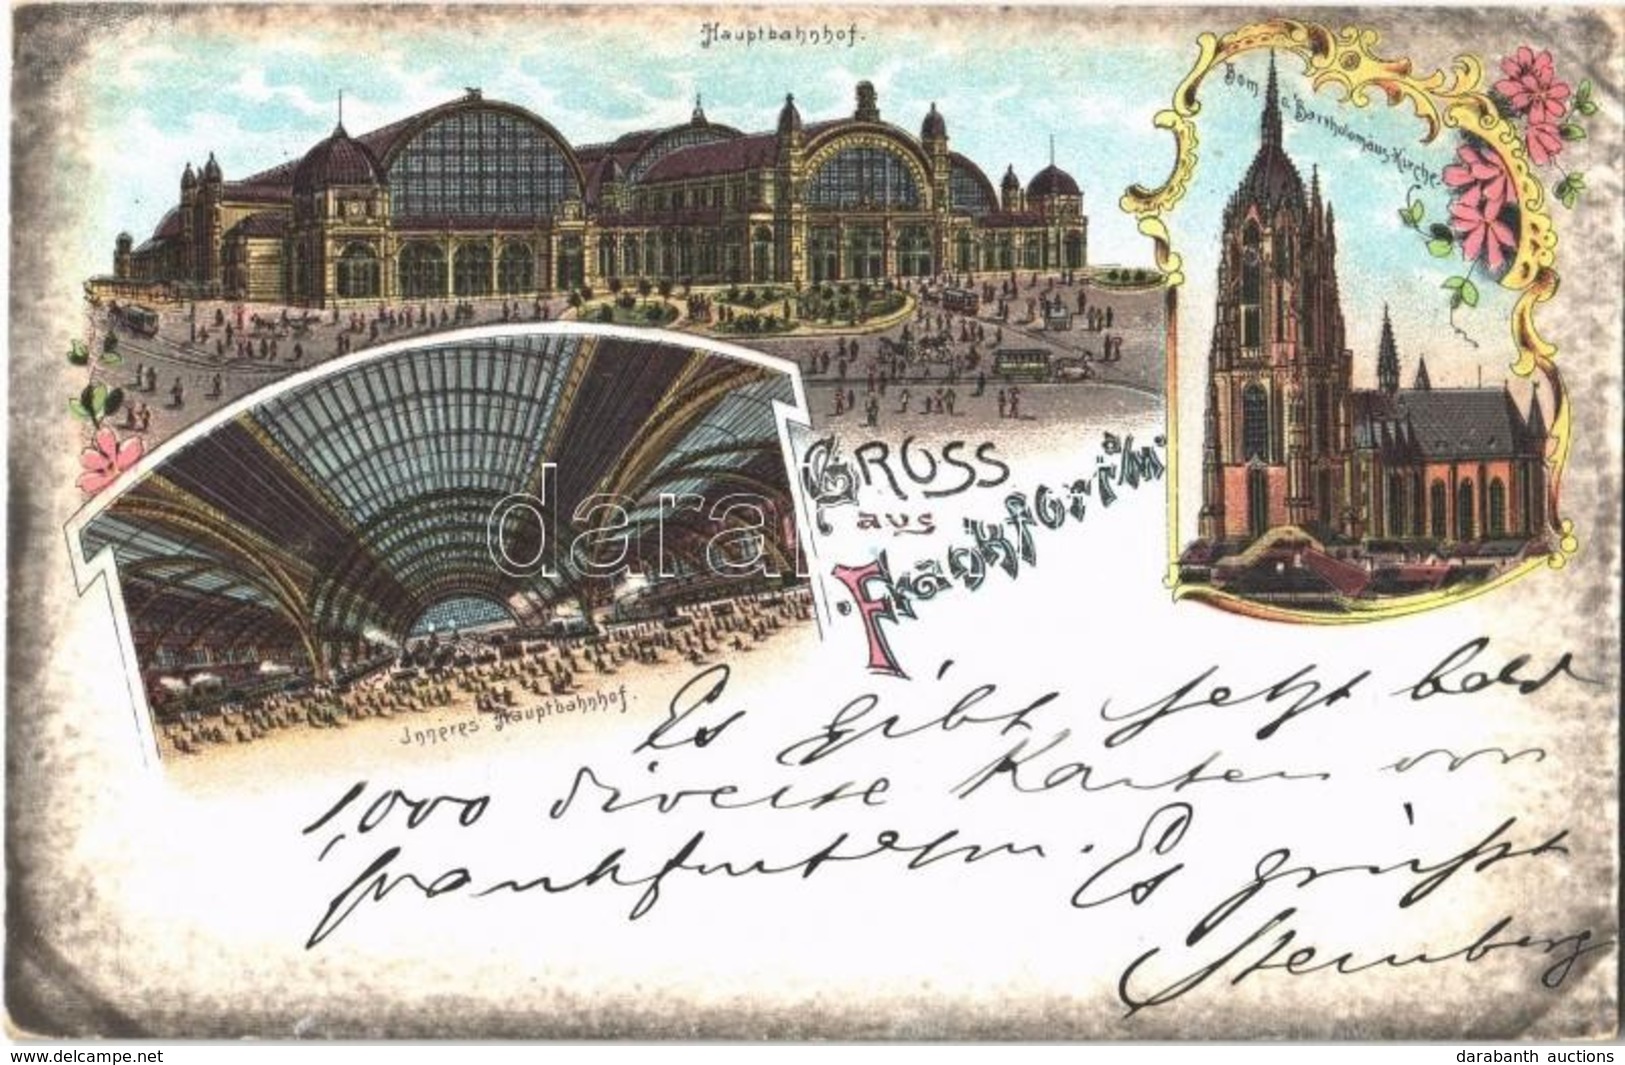 T2 1898 Frankfurt, Hauptbahnhof, Inneres, Dom Und Bartholomaus Kirche / Railway Station Interior, Dome And Church. Art N - Unclassified